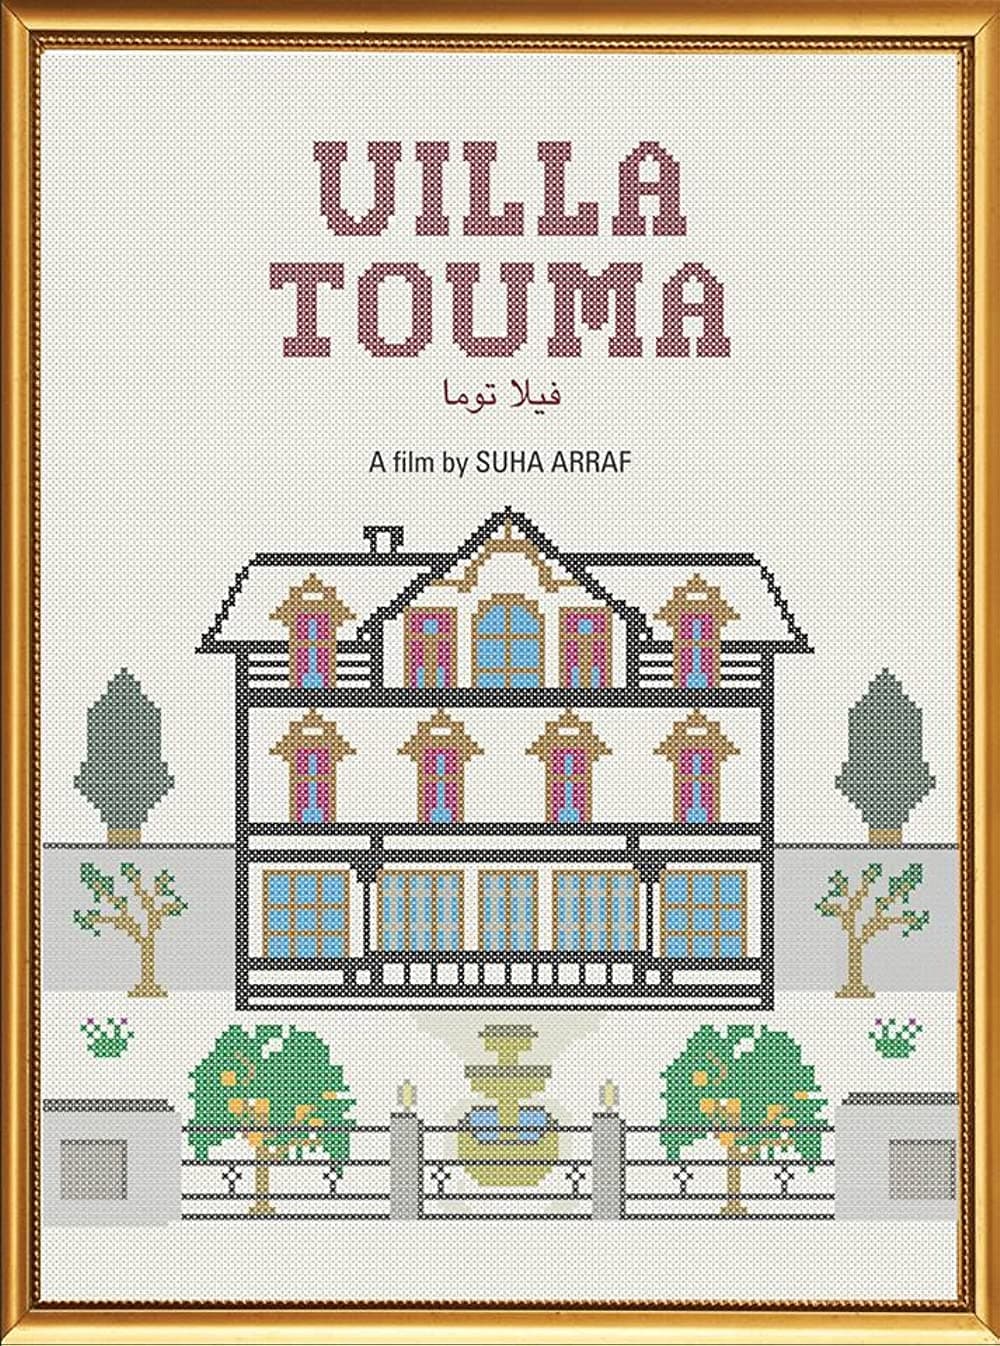 Villa Touma